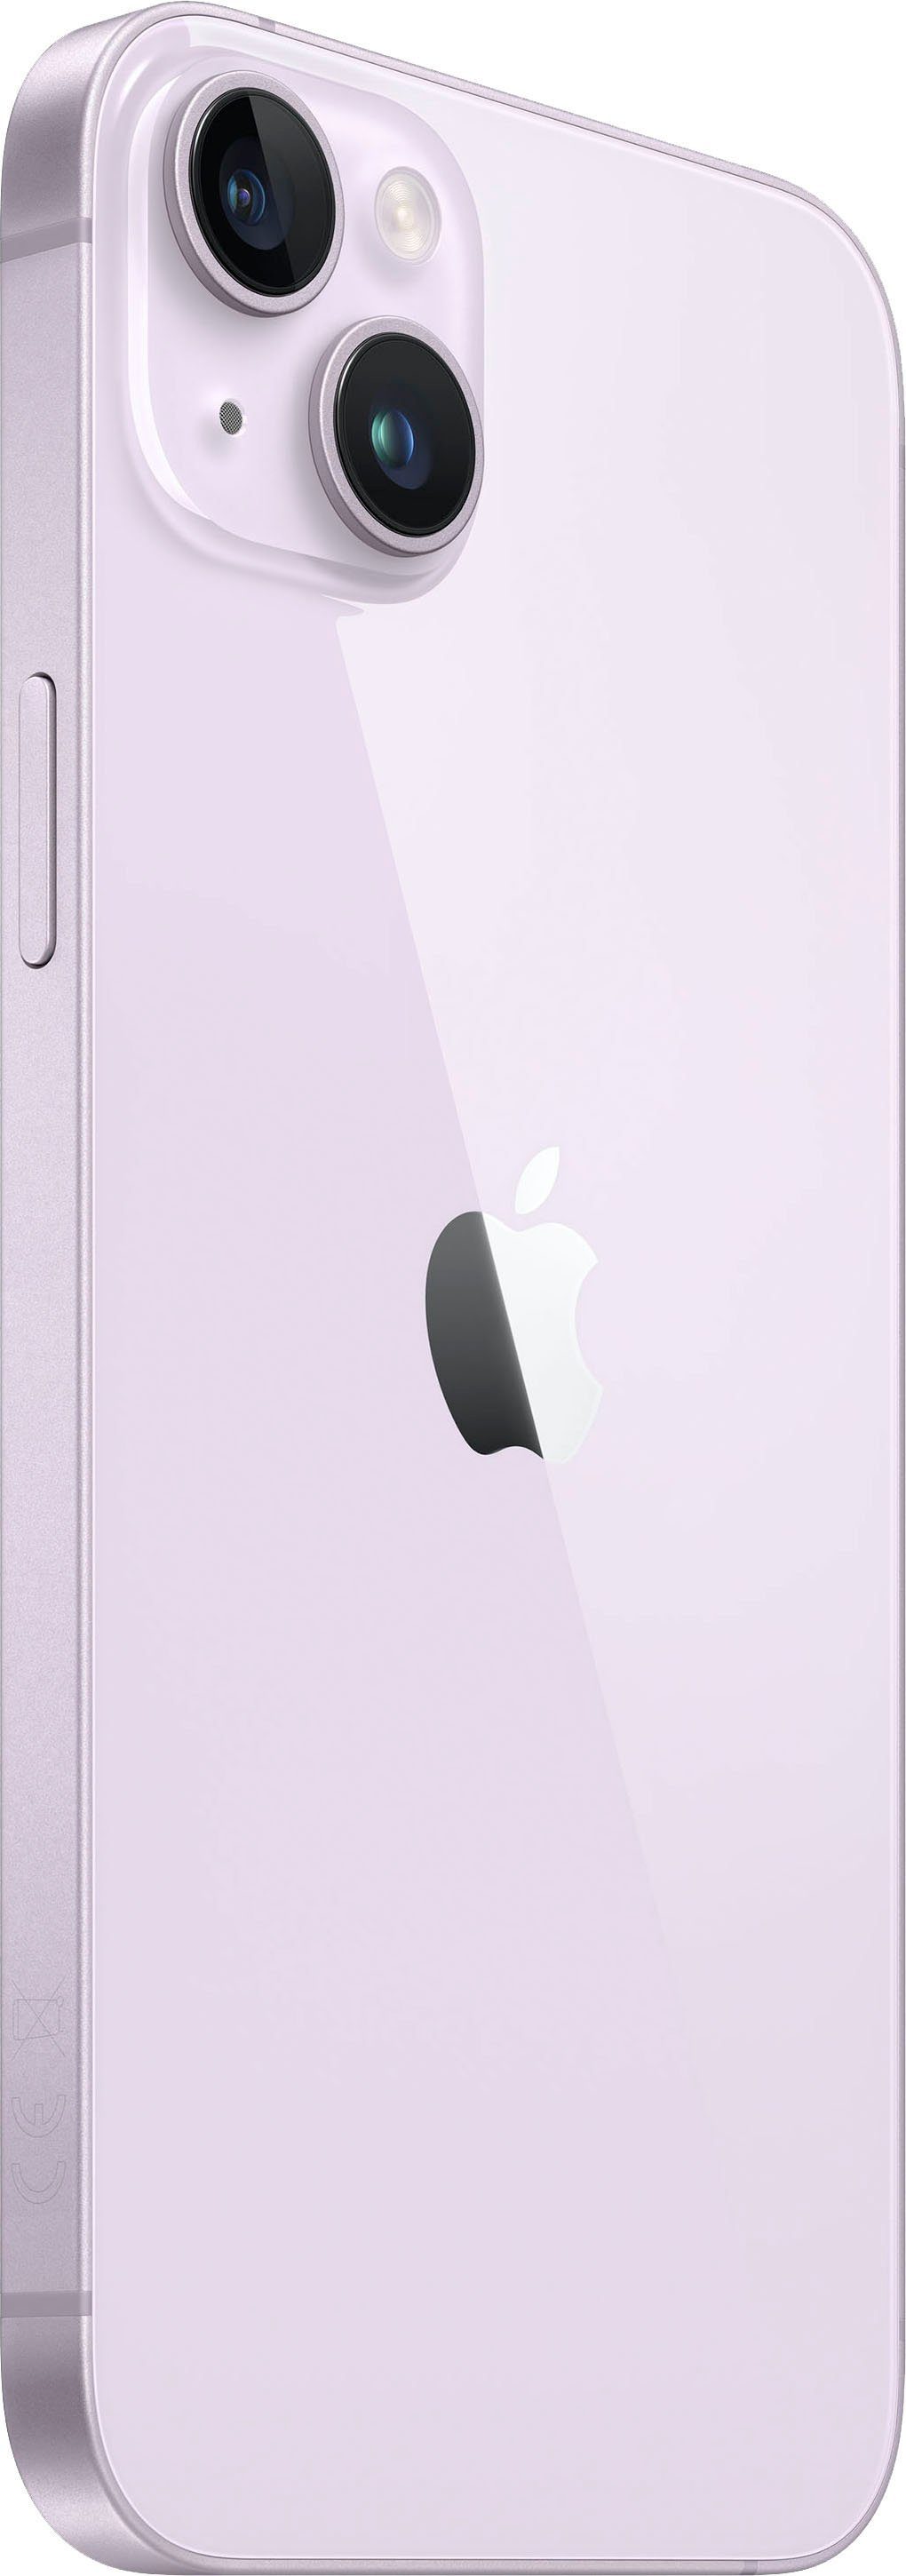 Apple iPhone Plus 512 Smartphone 14 MP Zoll, purple cm/6,7 12 (17 GB 512GB Speicherplatz, Kamera)